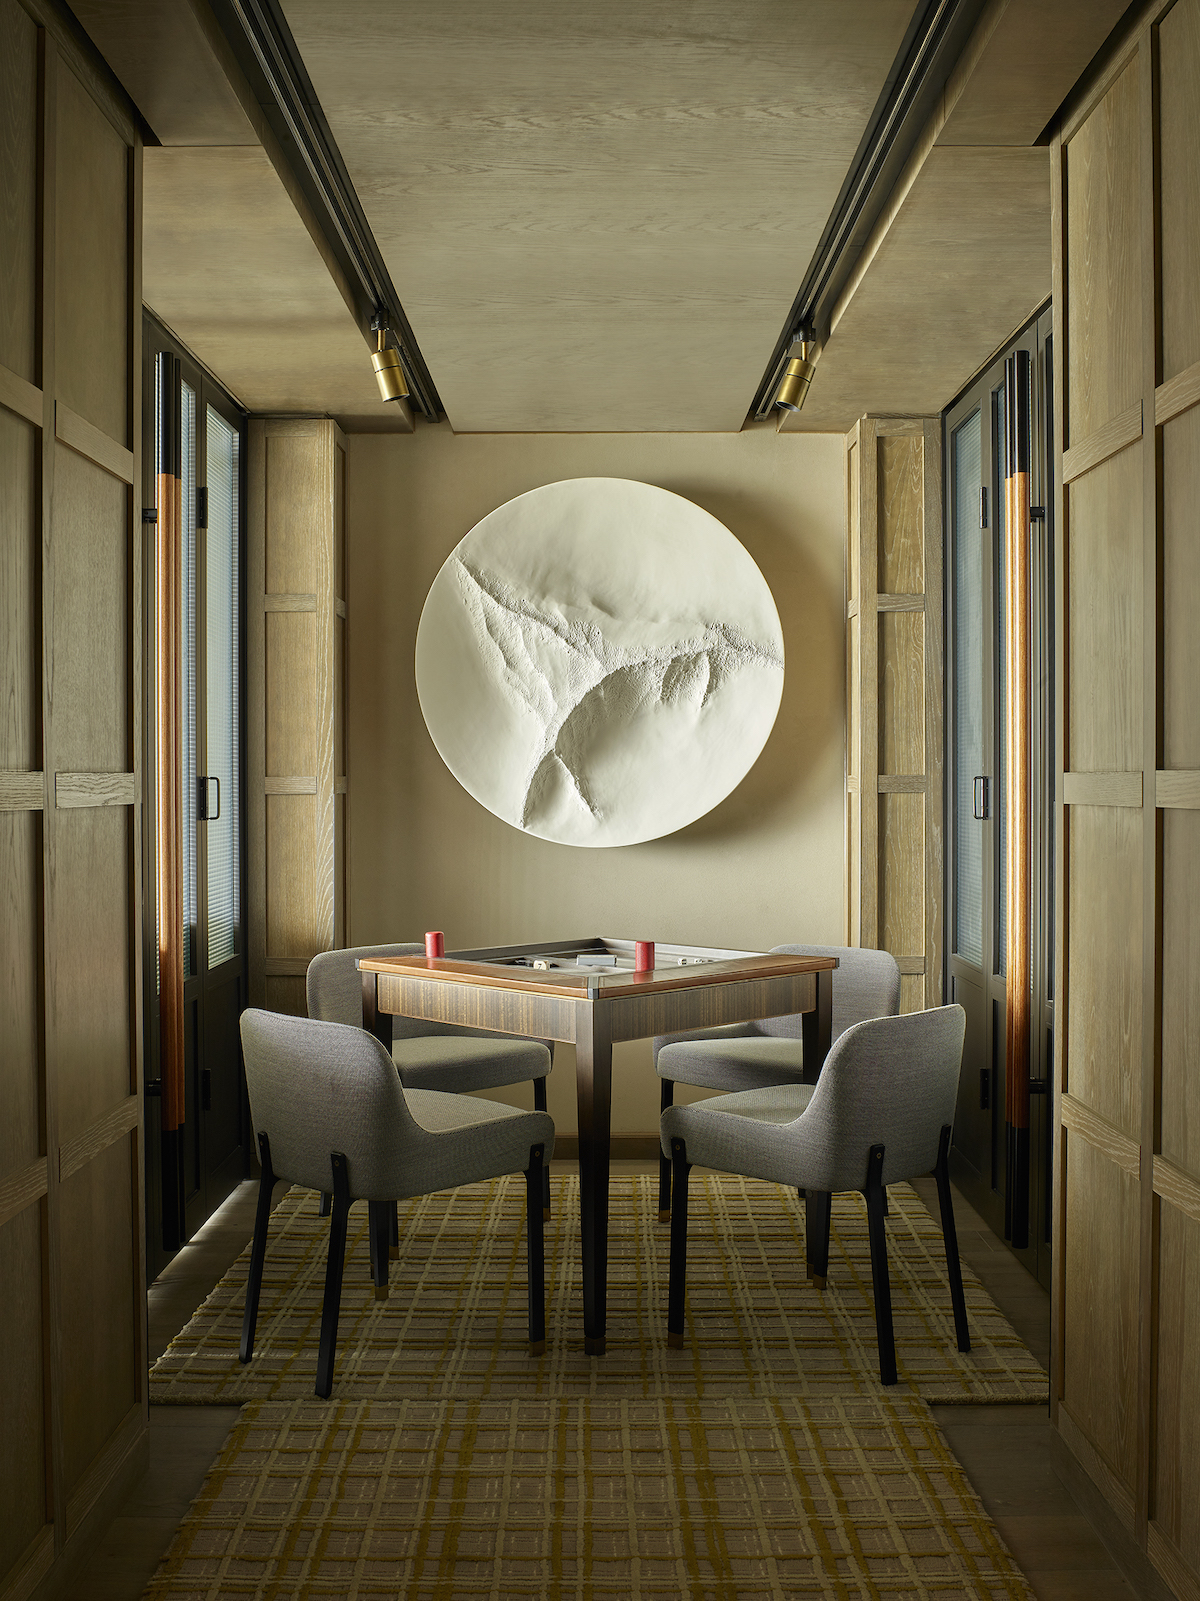 An asian-inspired circular wall art in lounge